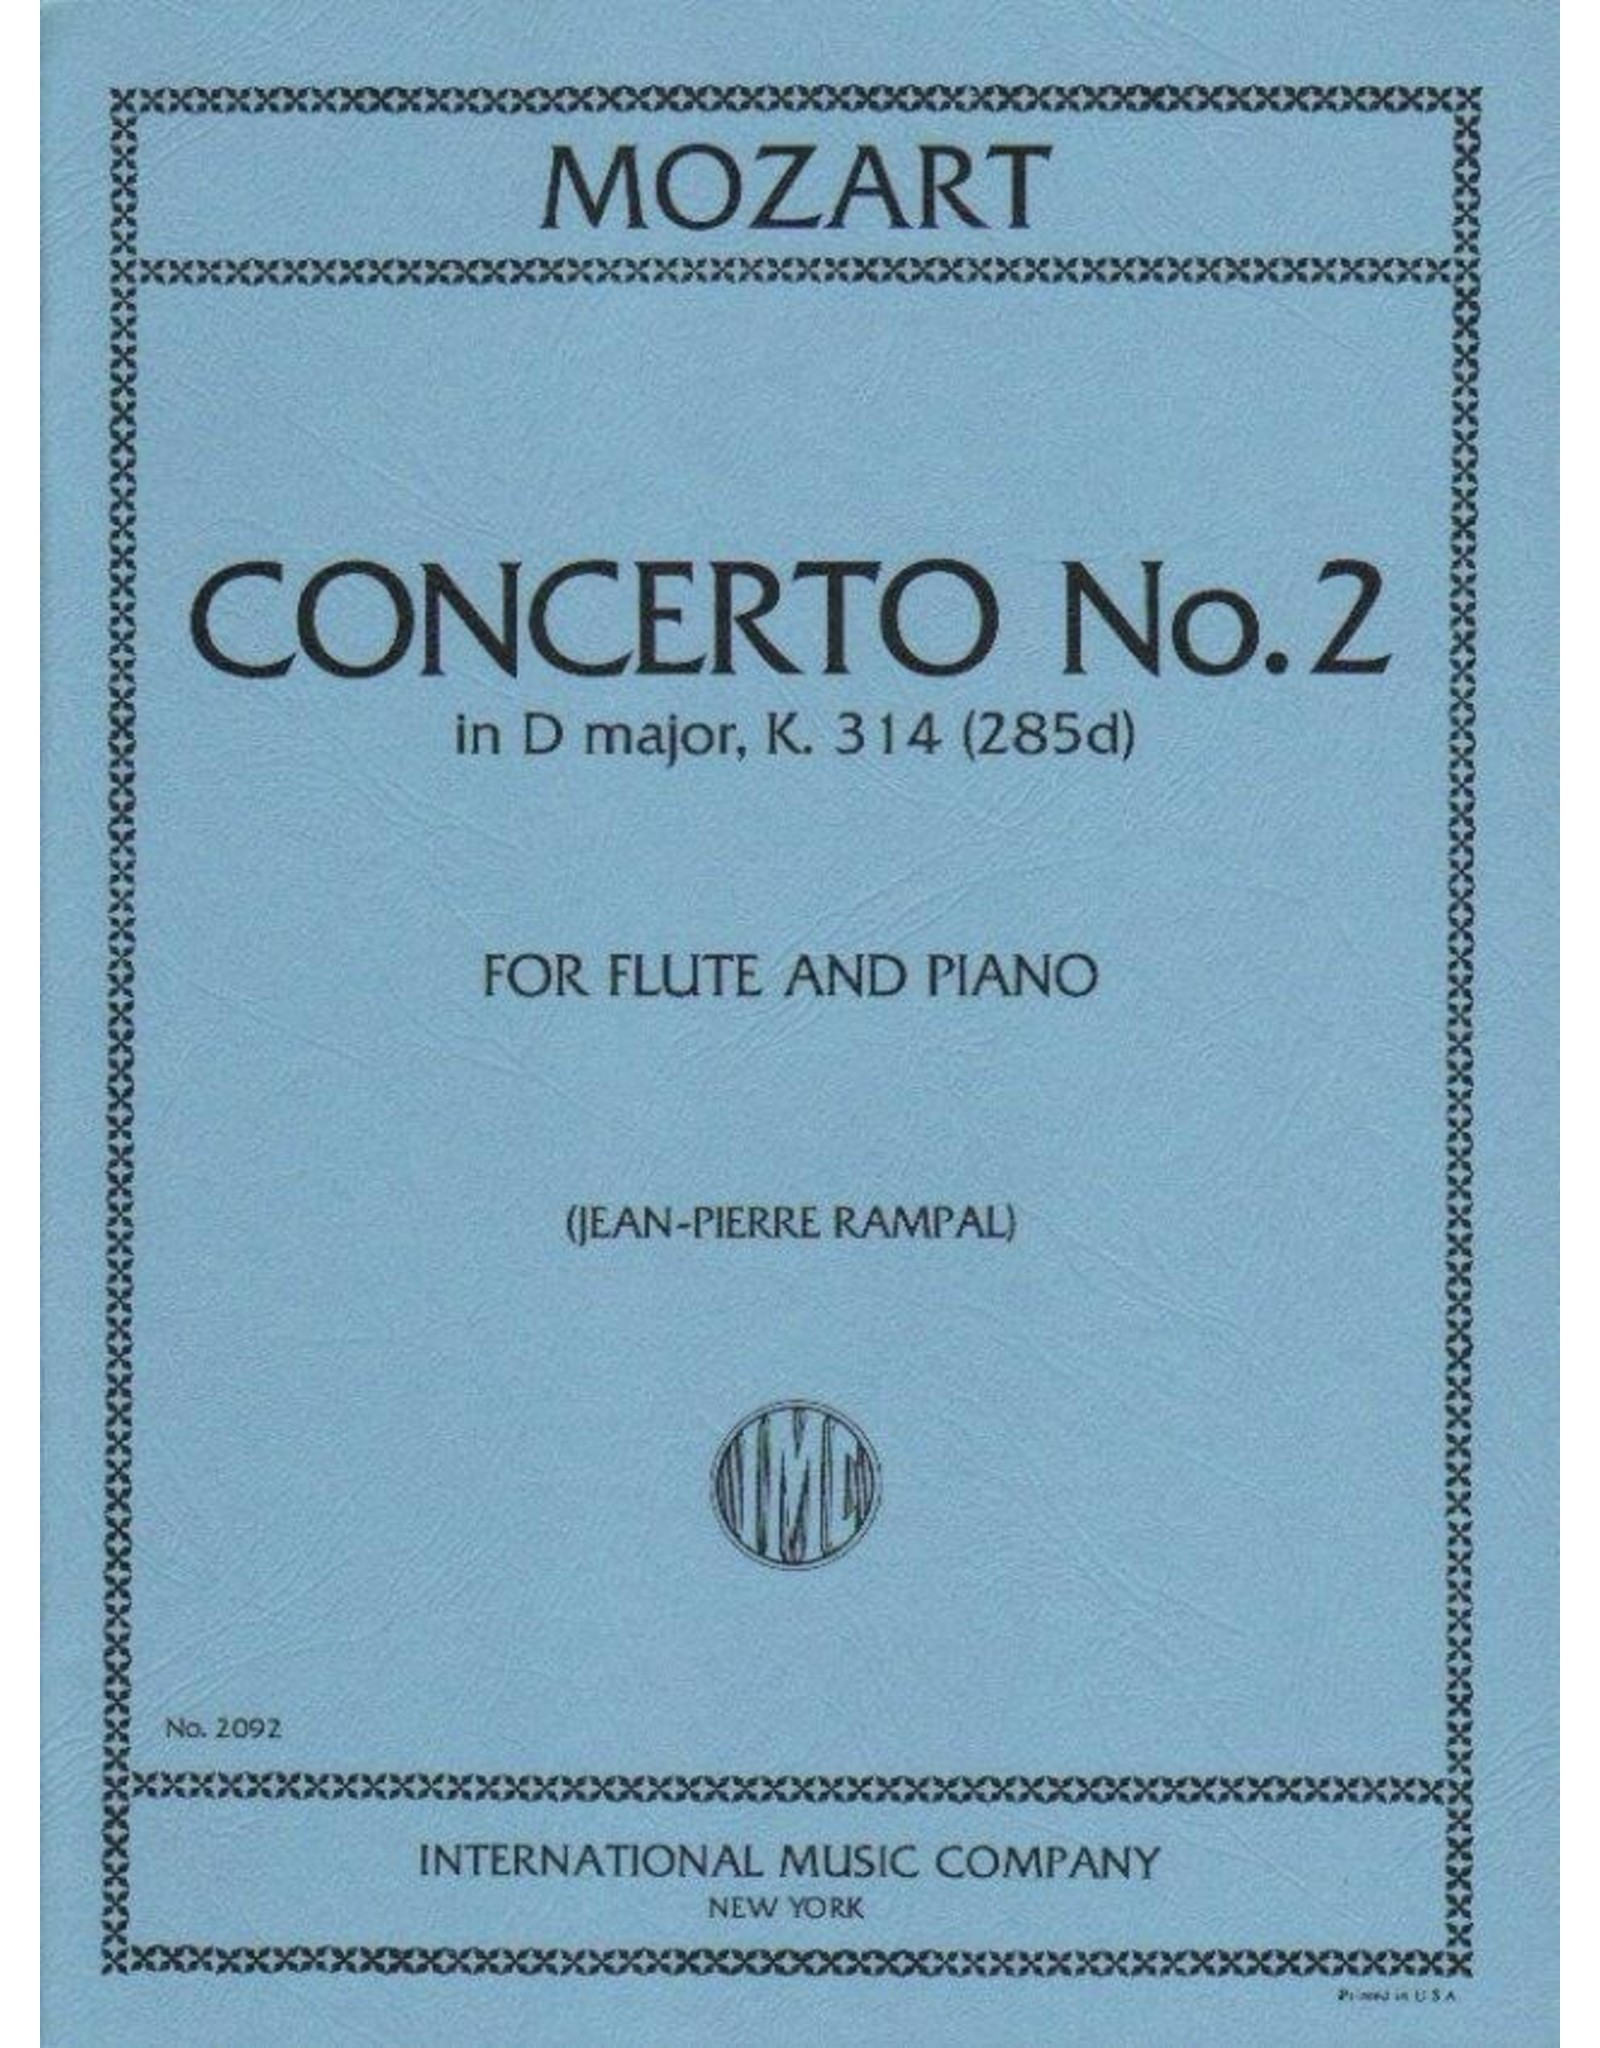 International Mozart - Concerto No. 2 in D Major K. 314 Flute and Piano